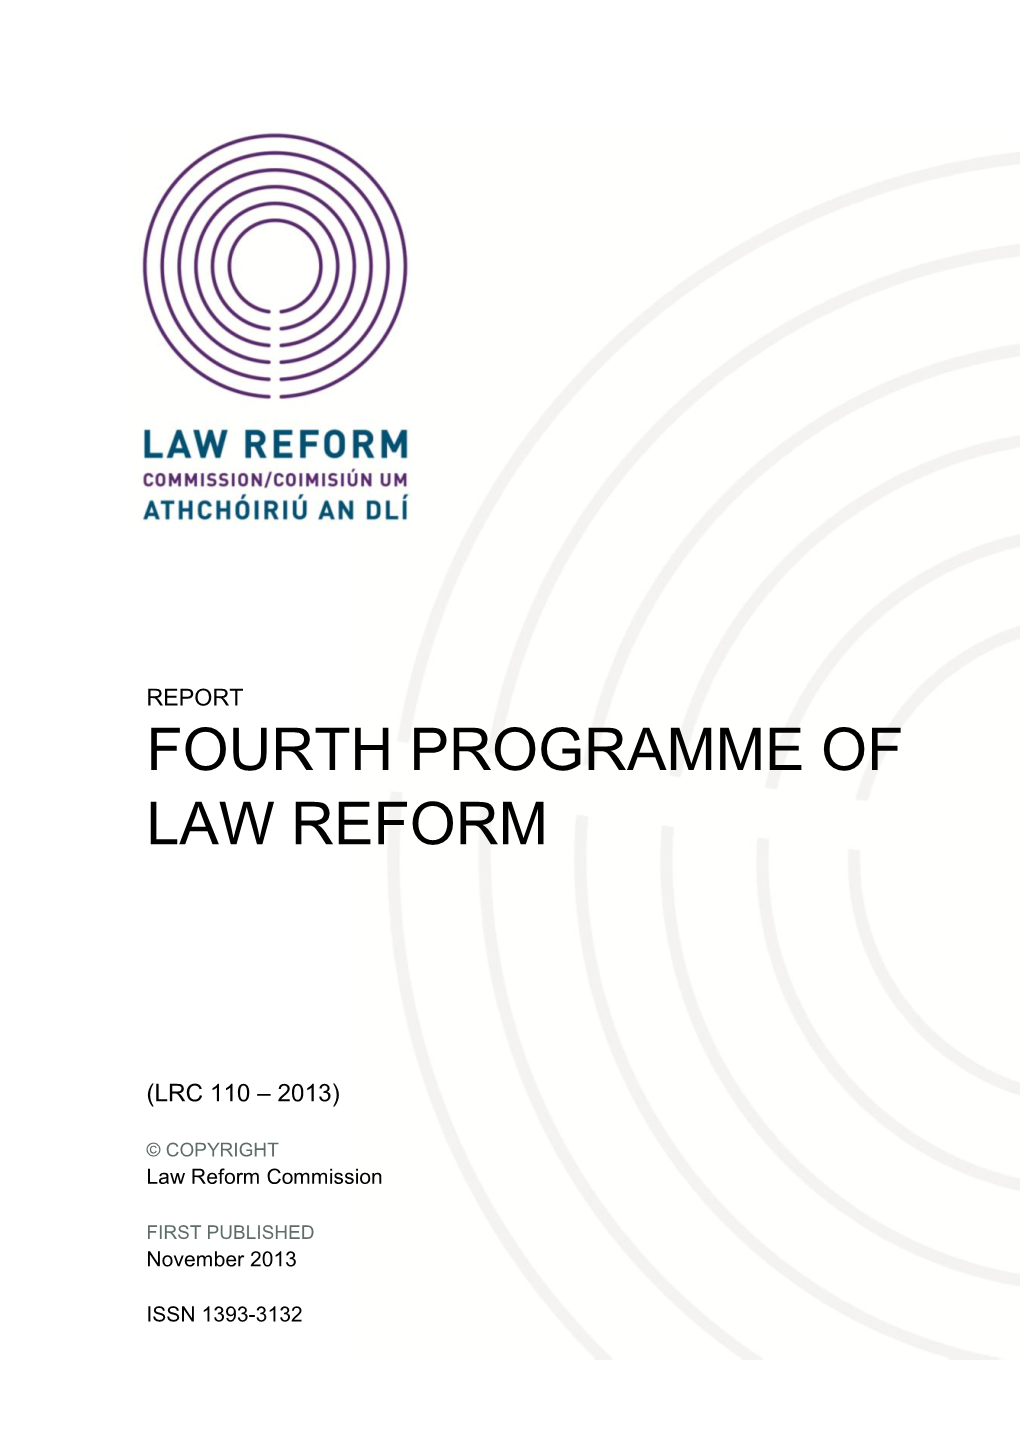 LRC 110-2013 Fourth Programme of Law Reform.Pdf